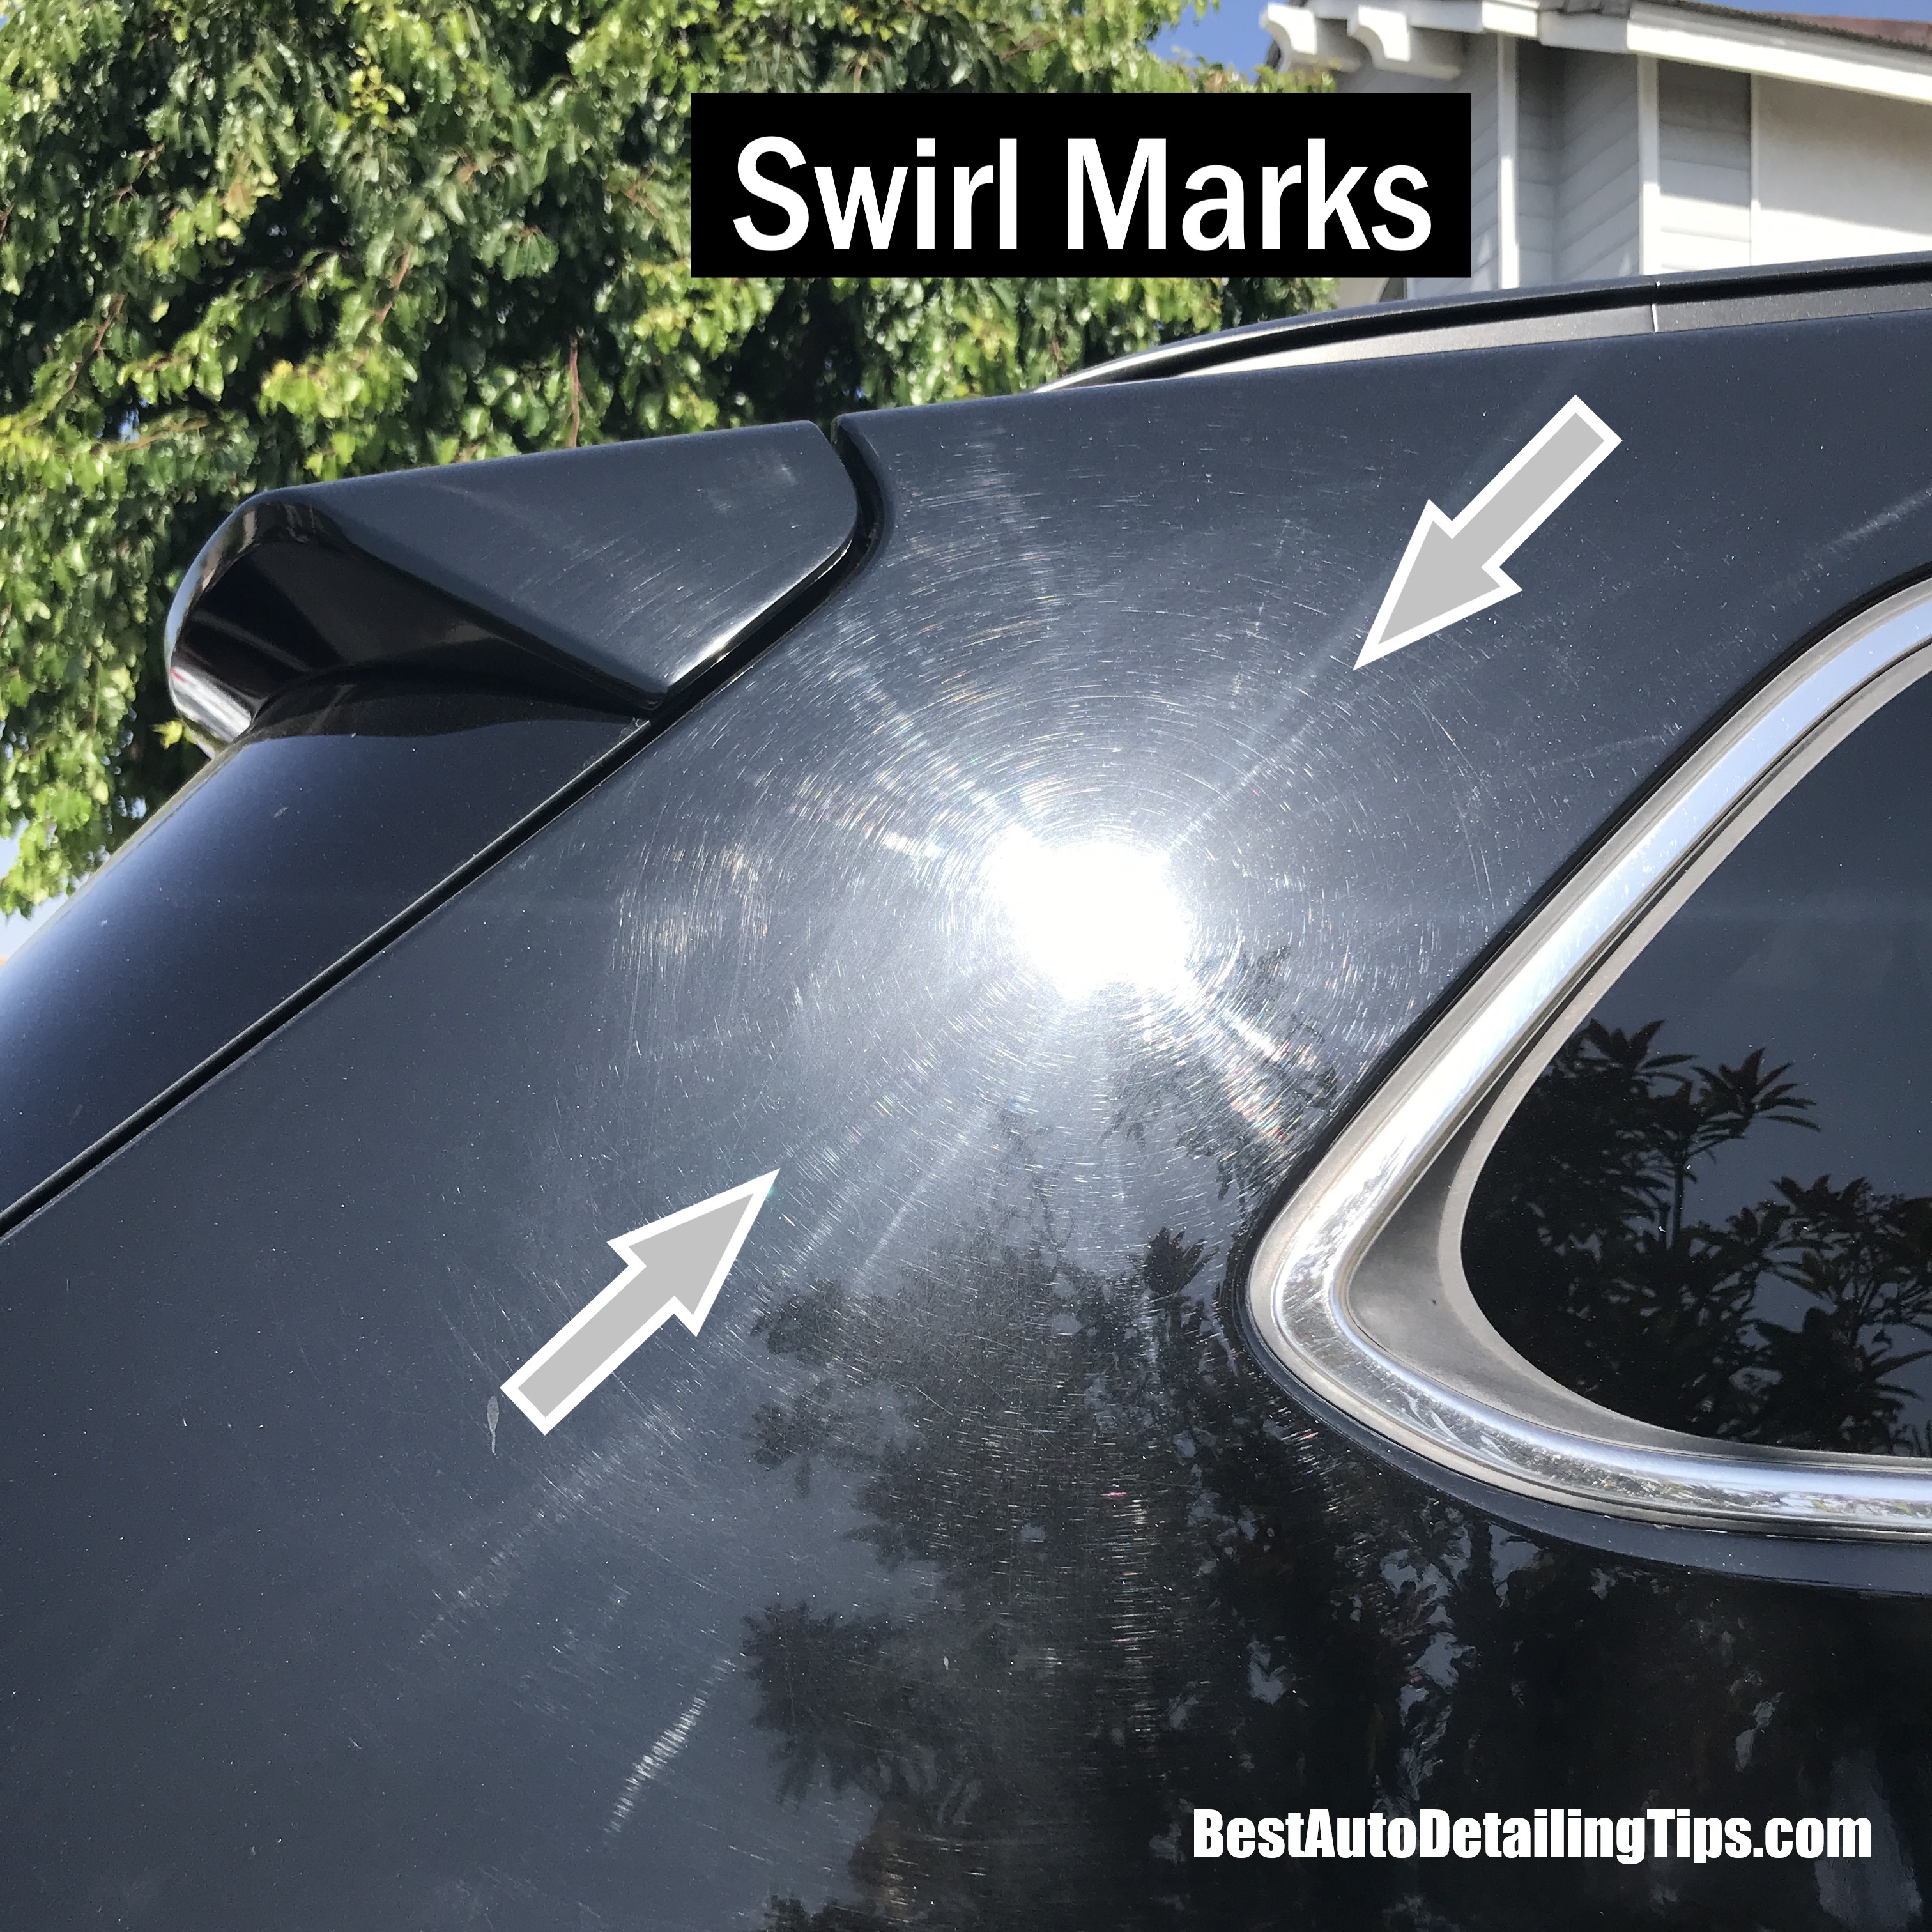 Does polish remove swirl marks or does polish create swirl marks